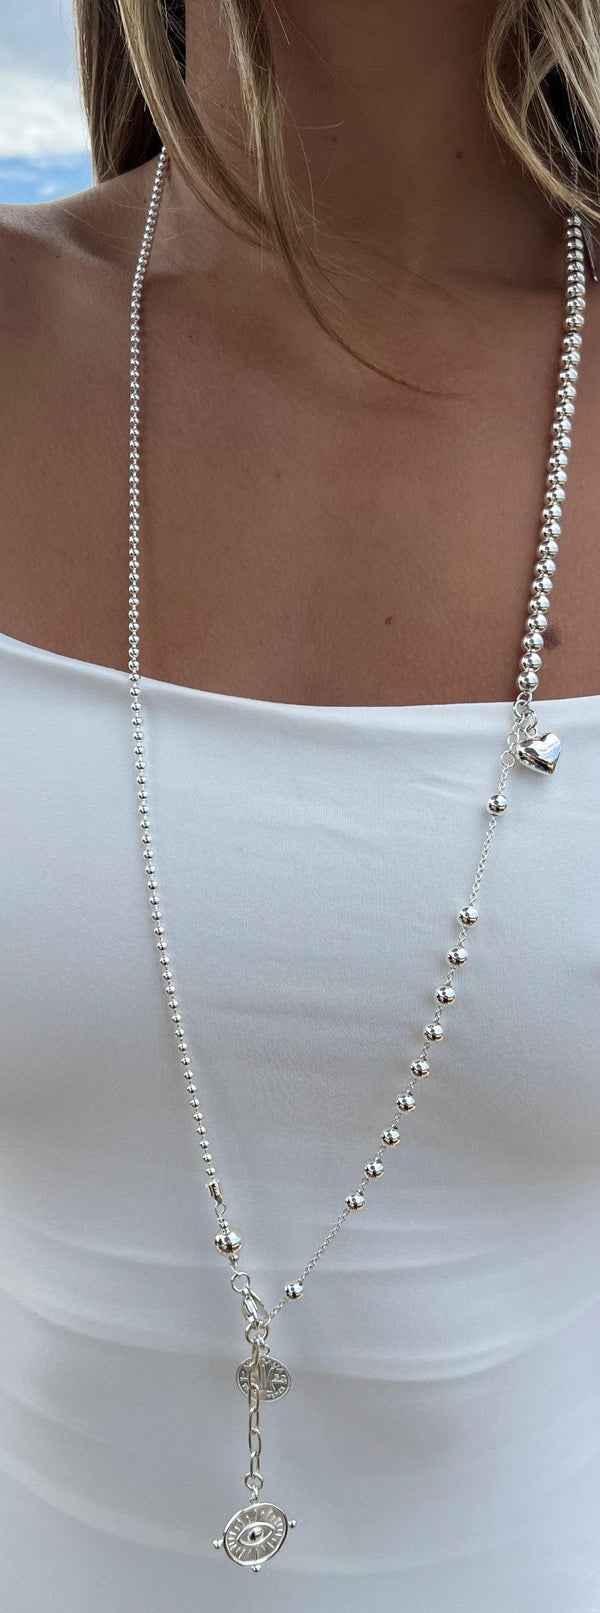 Freedom necklace - Sue Sensi